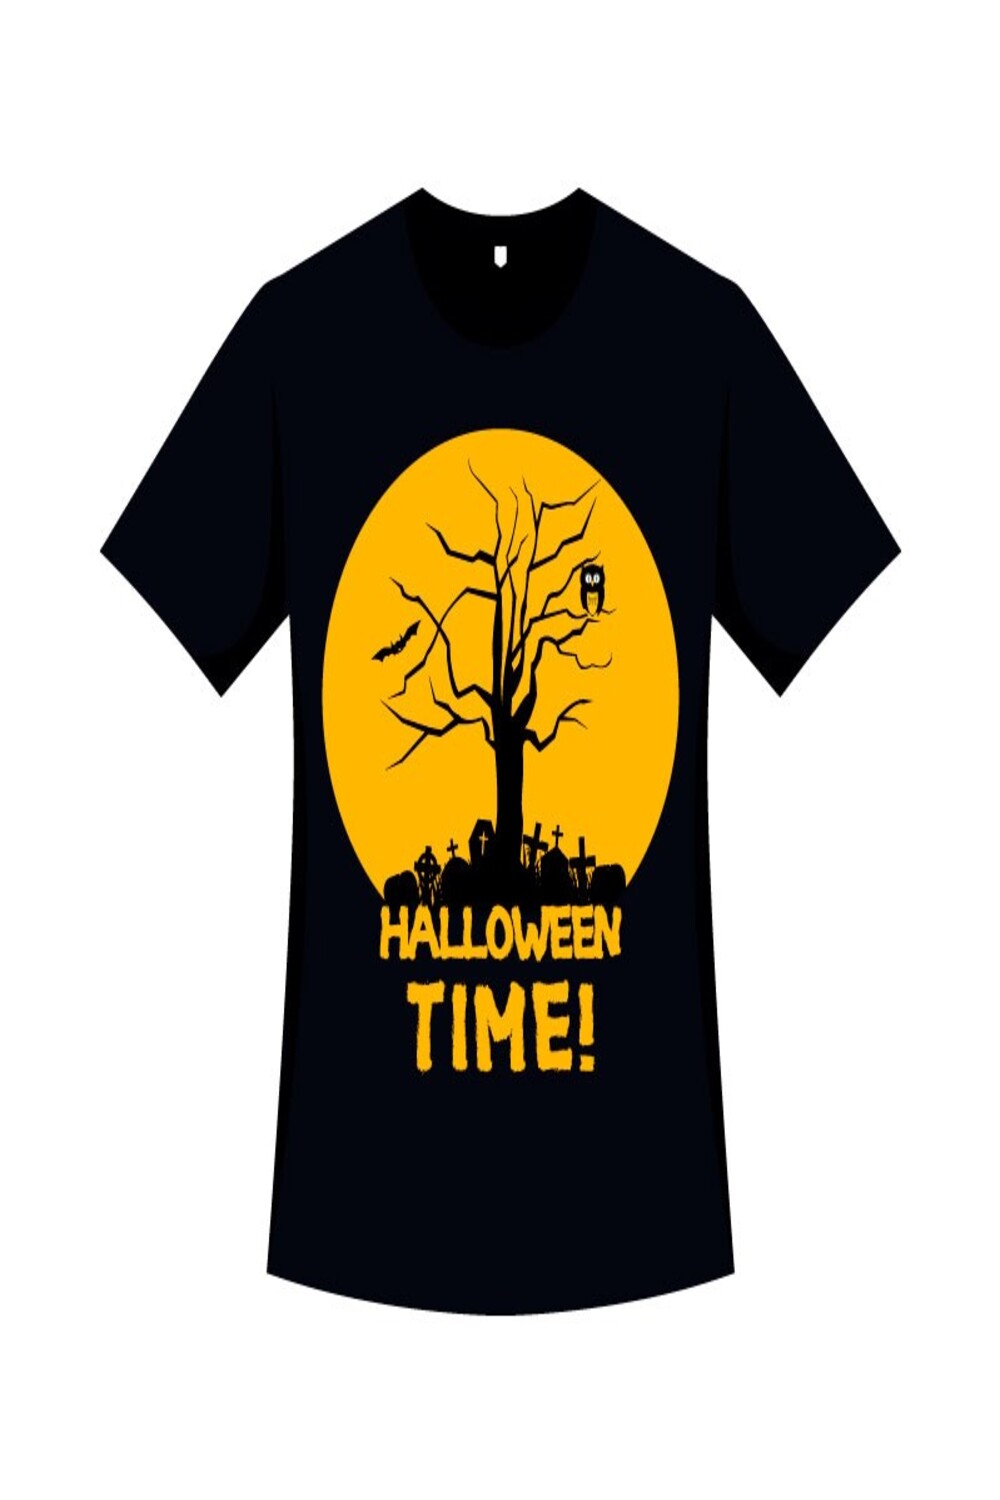 Silhouette T-shirt Design Halloween pinterest image.